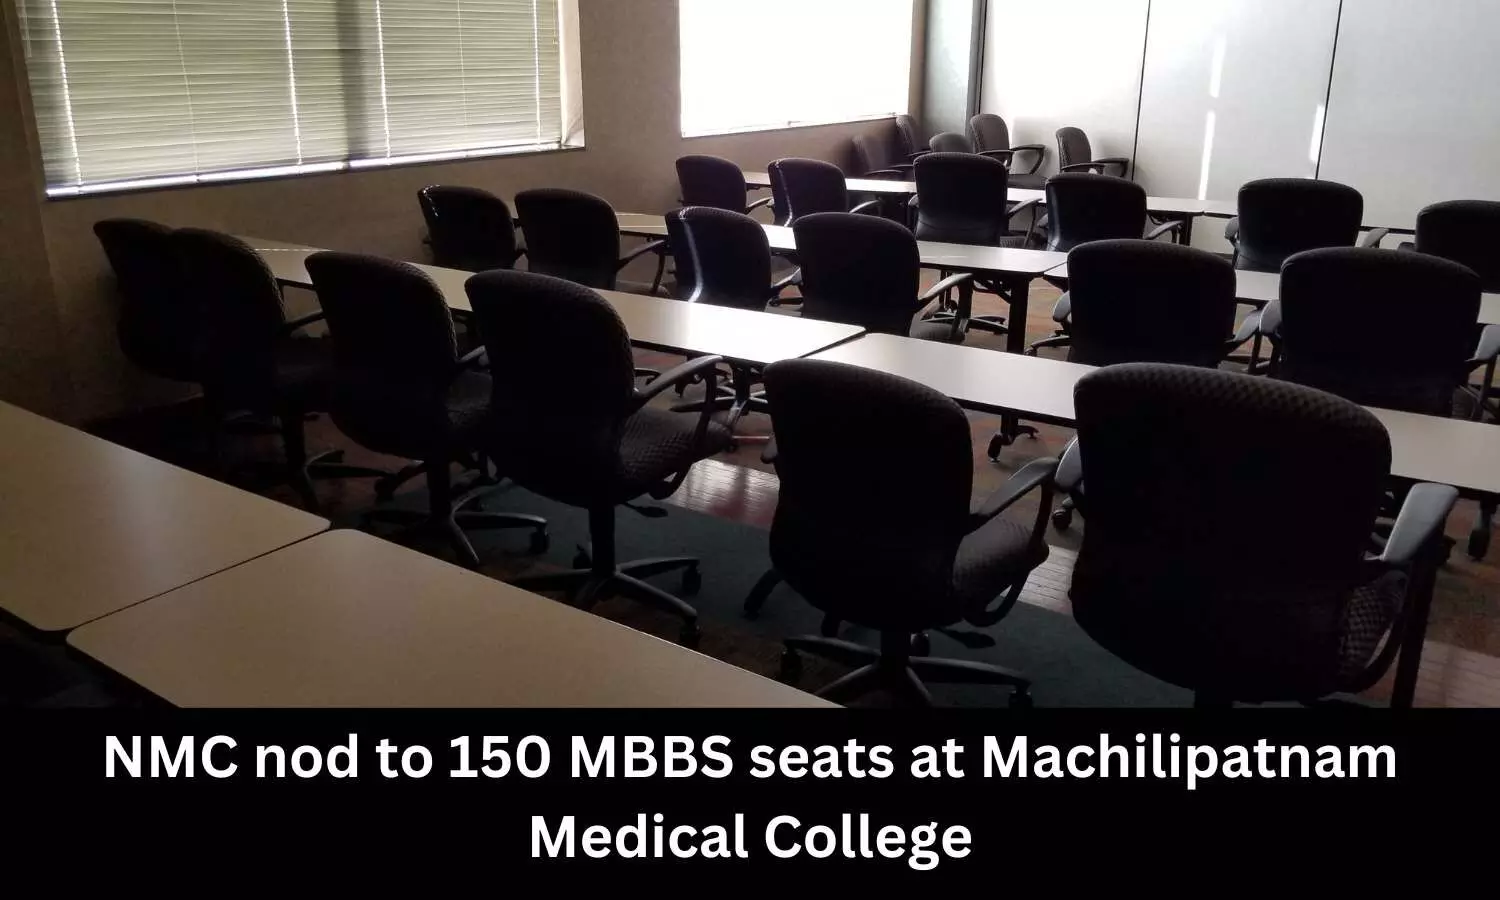 GMC Machilipatnam gets NMC nod for 150 MBBS seats